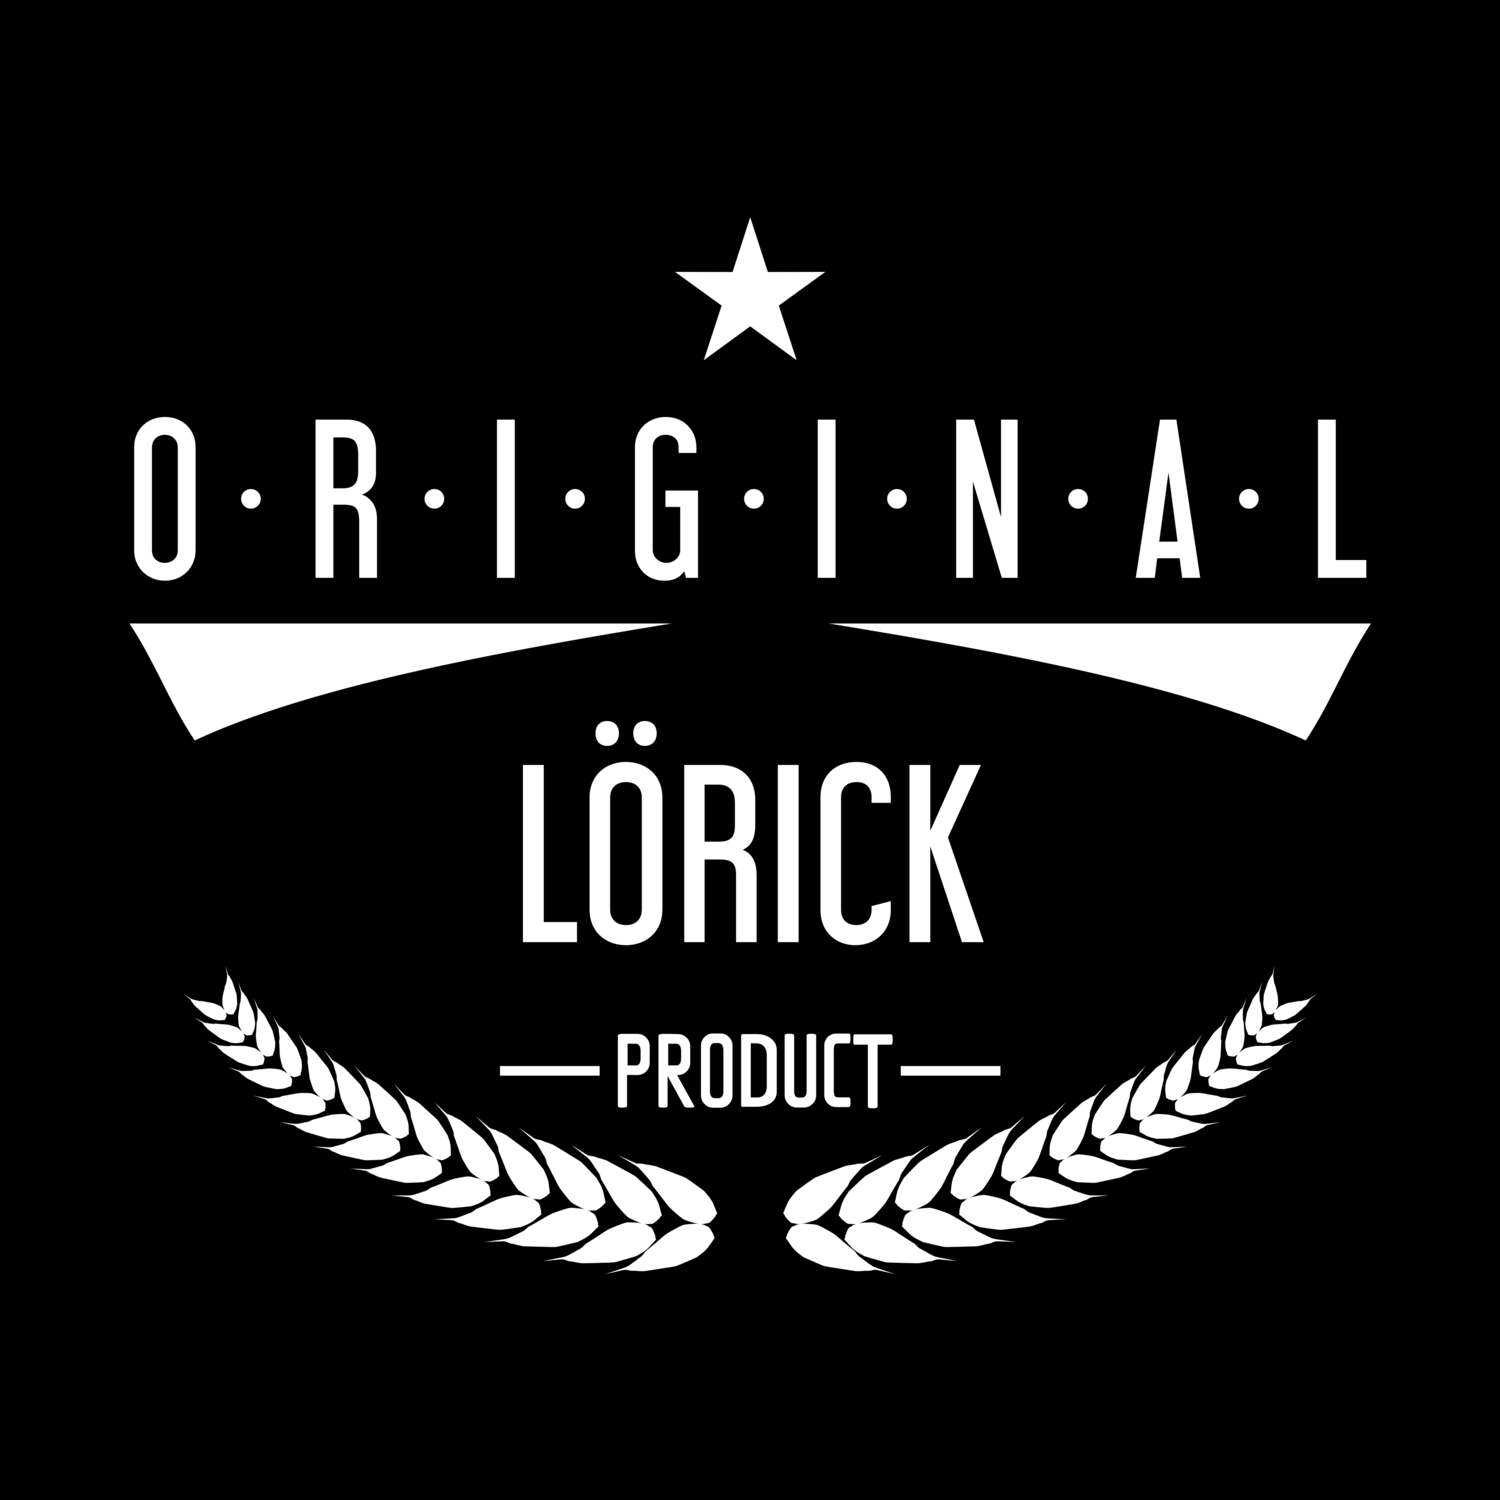 Lörick T-Shirt »Original Product«